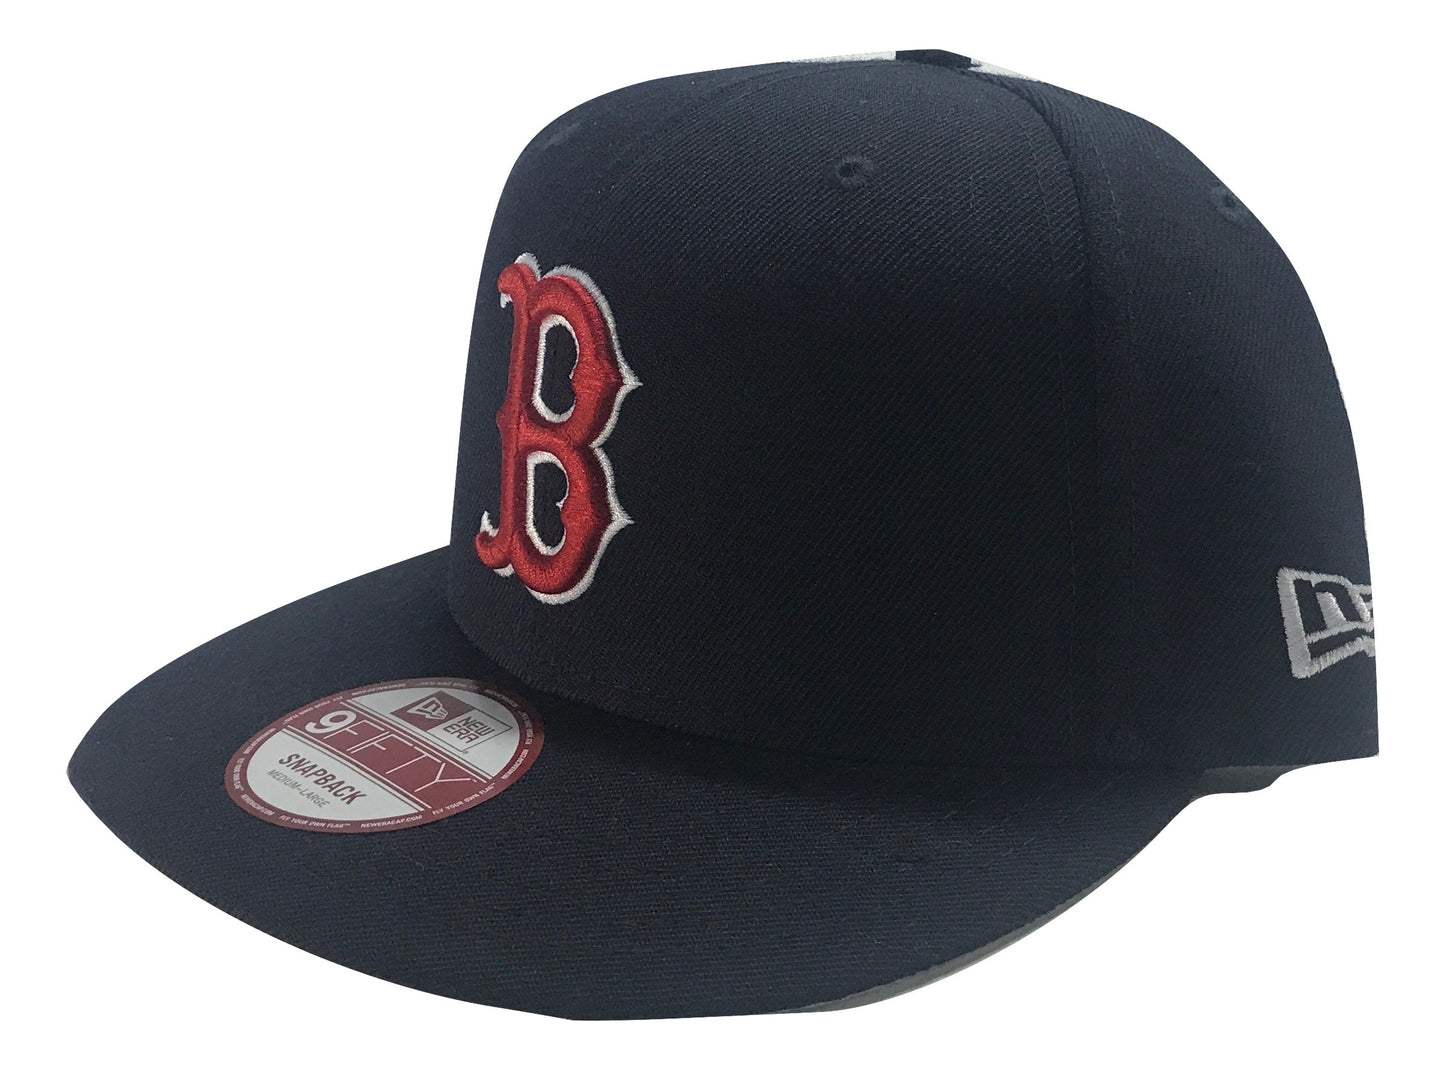 Boston Red Sox (Black) Snapback